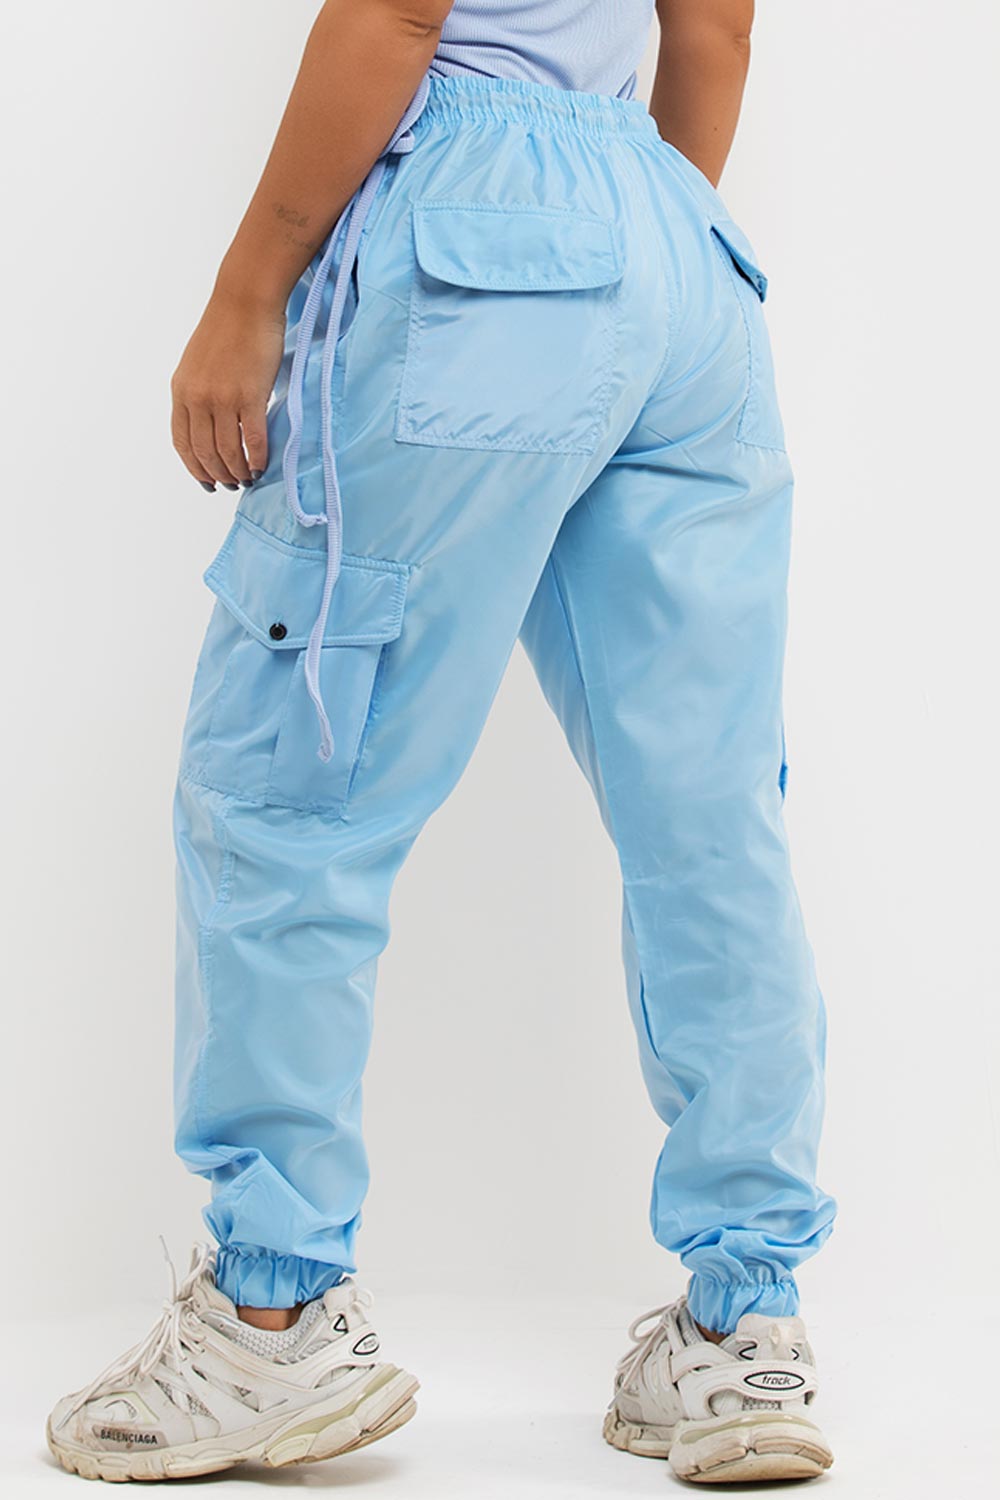 womens sky blue cargo pants